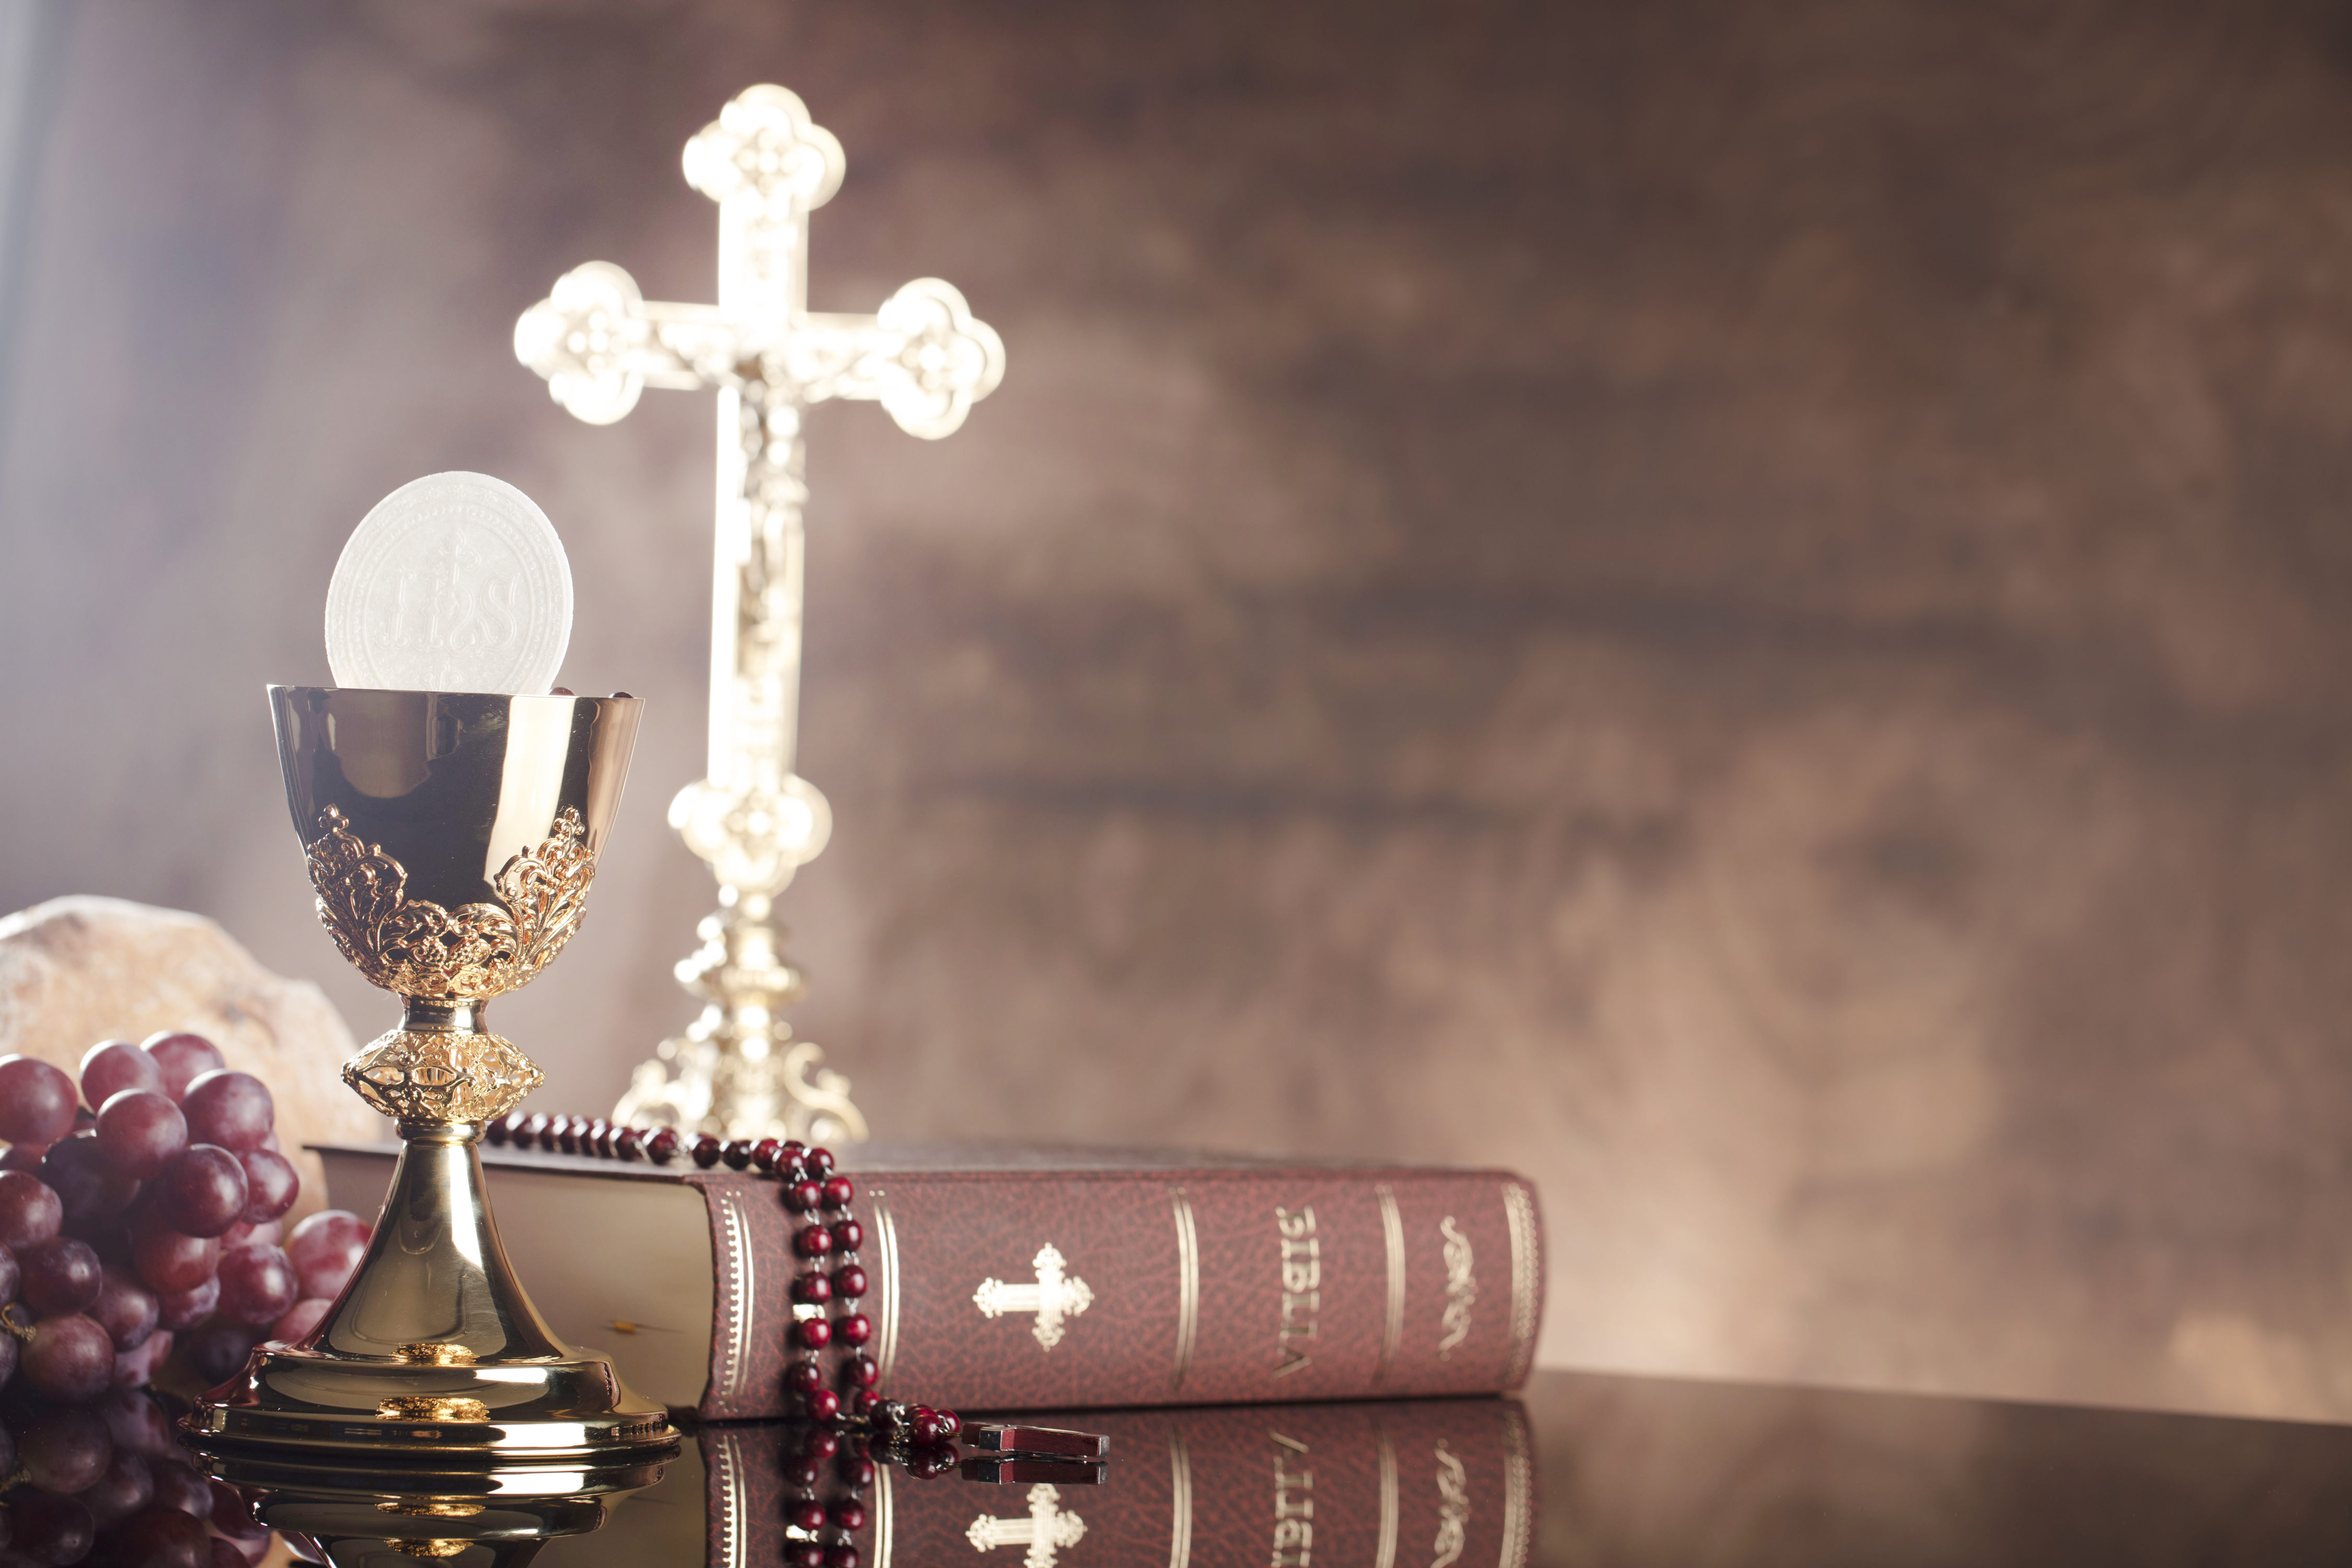 The Patrick Madrid Show - Bishop Cozzens Calls in to Discuss Eucharistic Revival